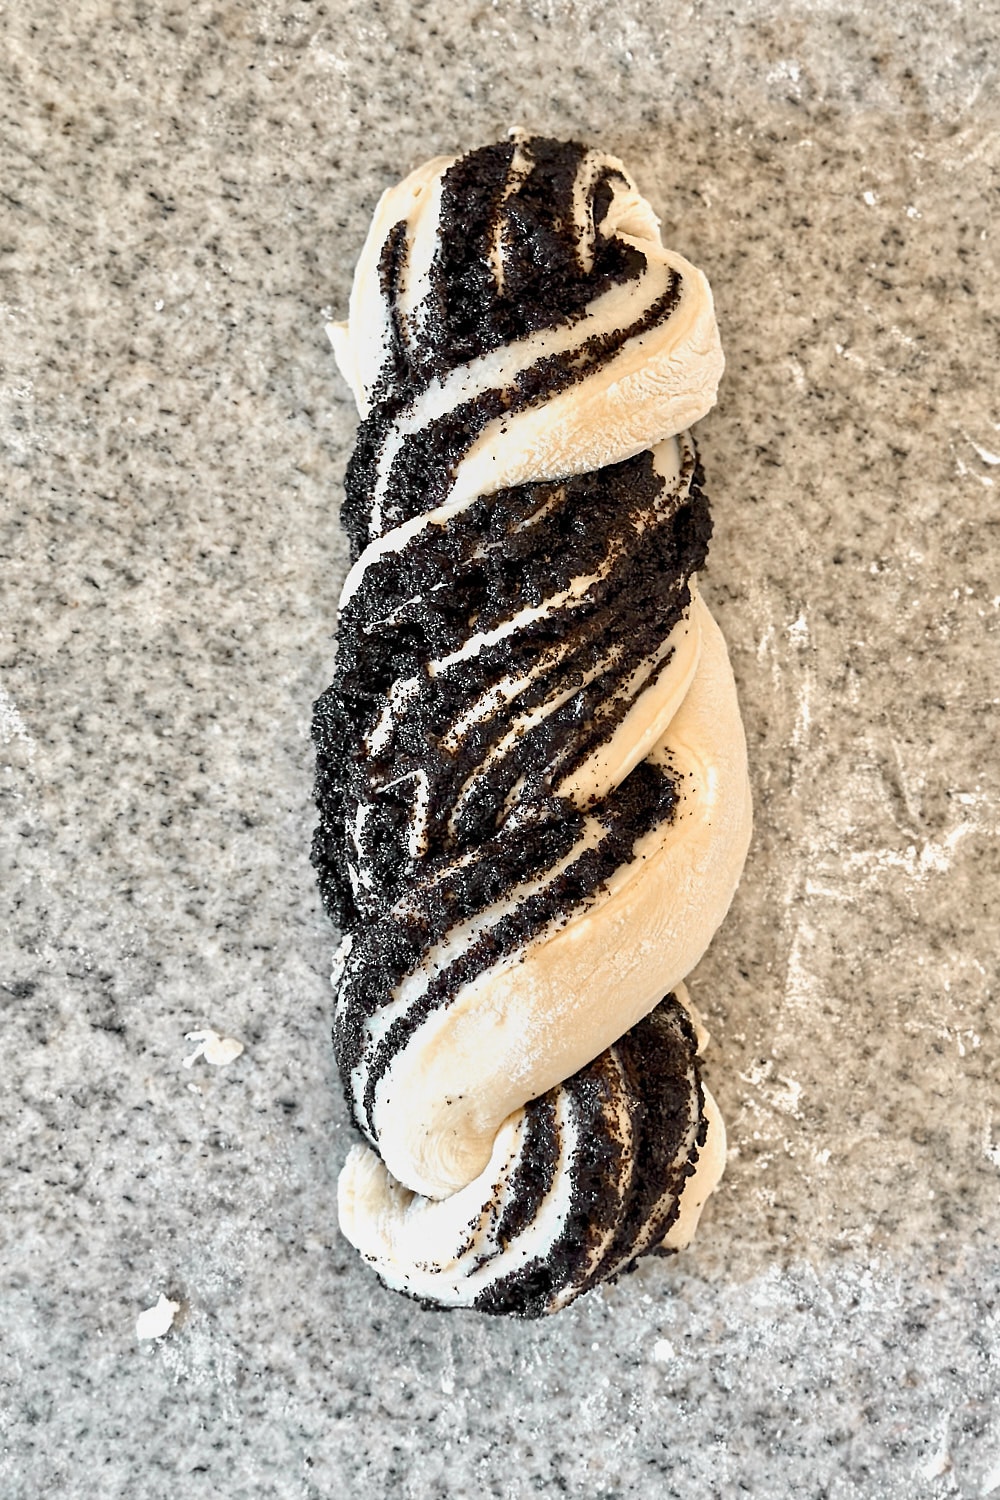 Twisting two dough strands together to shape a babka.